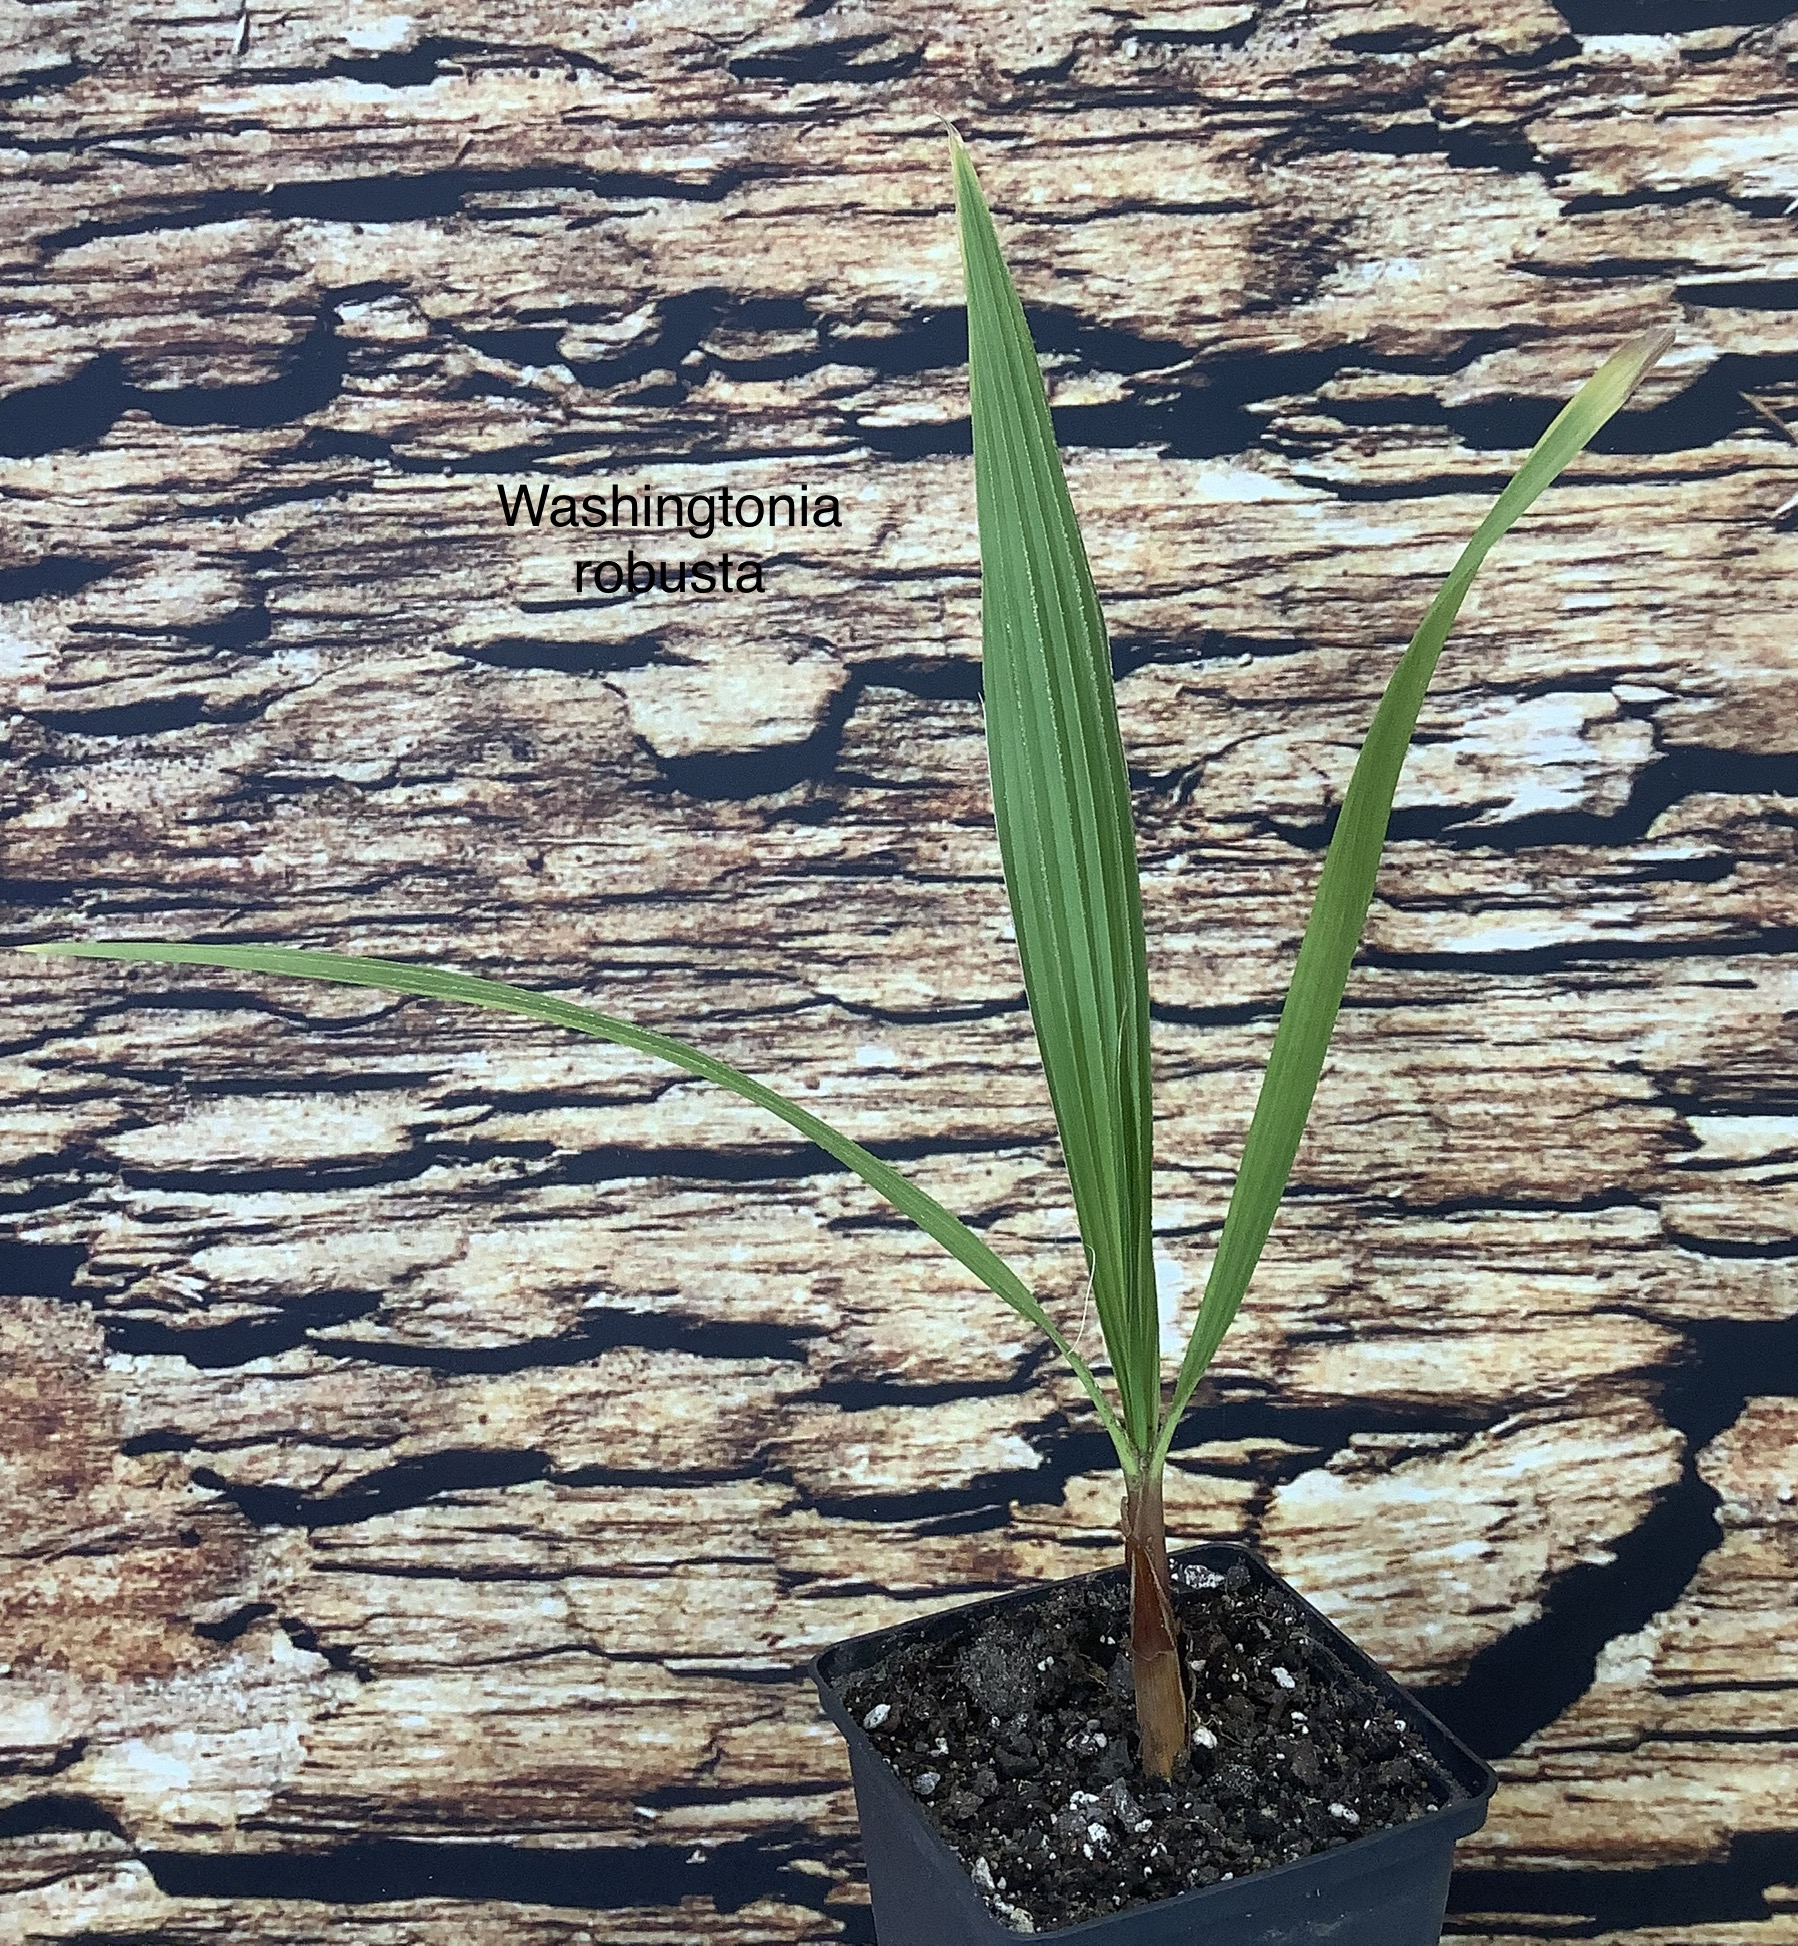 jungpflanze-washingtonia robusta